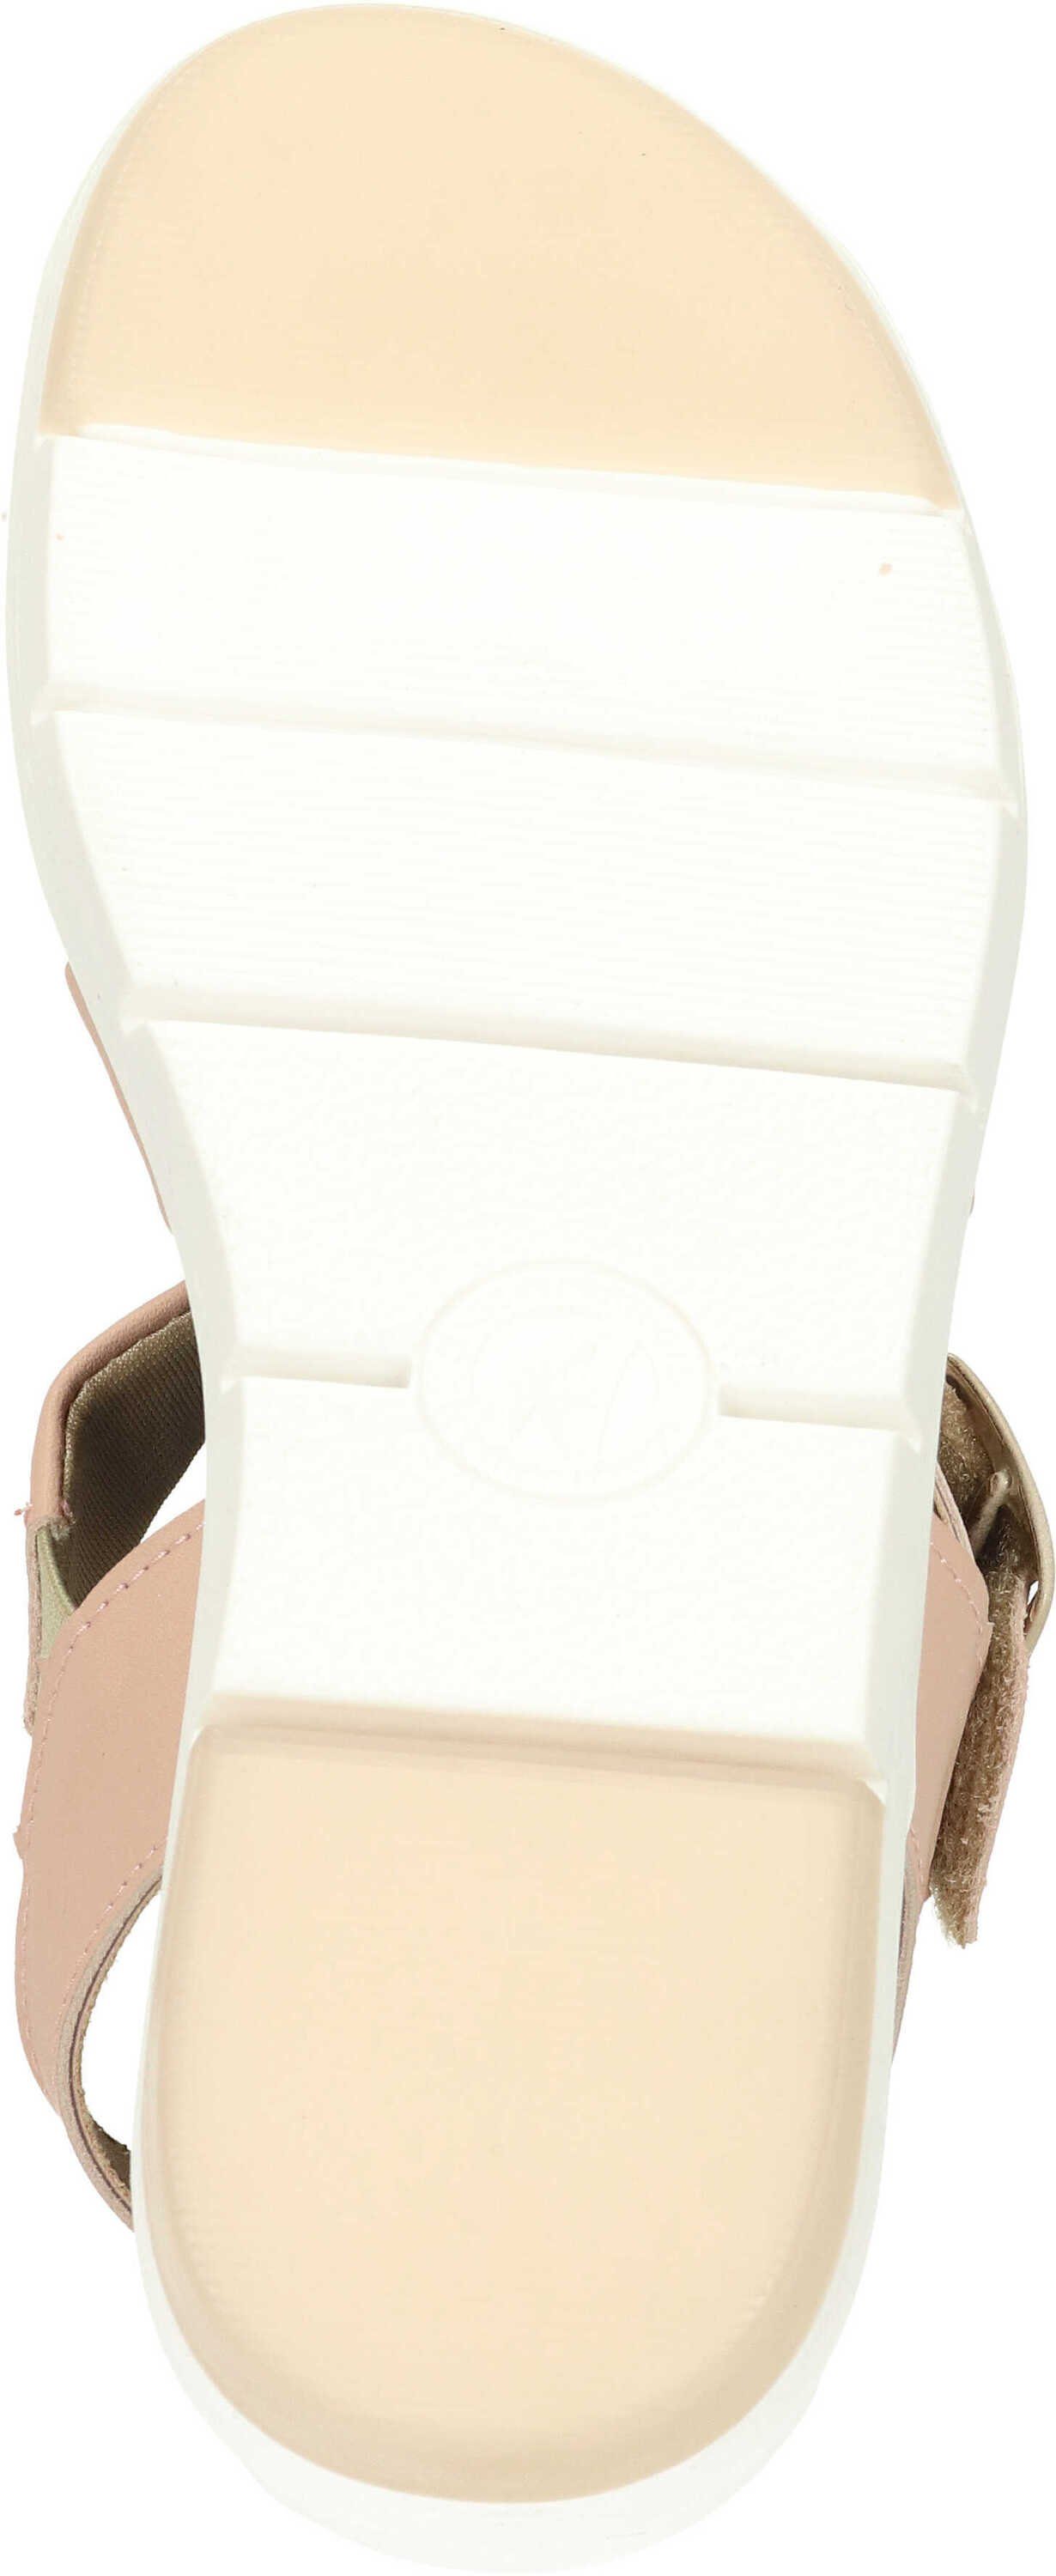 Gummizug Sandalen rosa Sandale mit Comfortabel